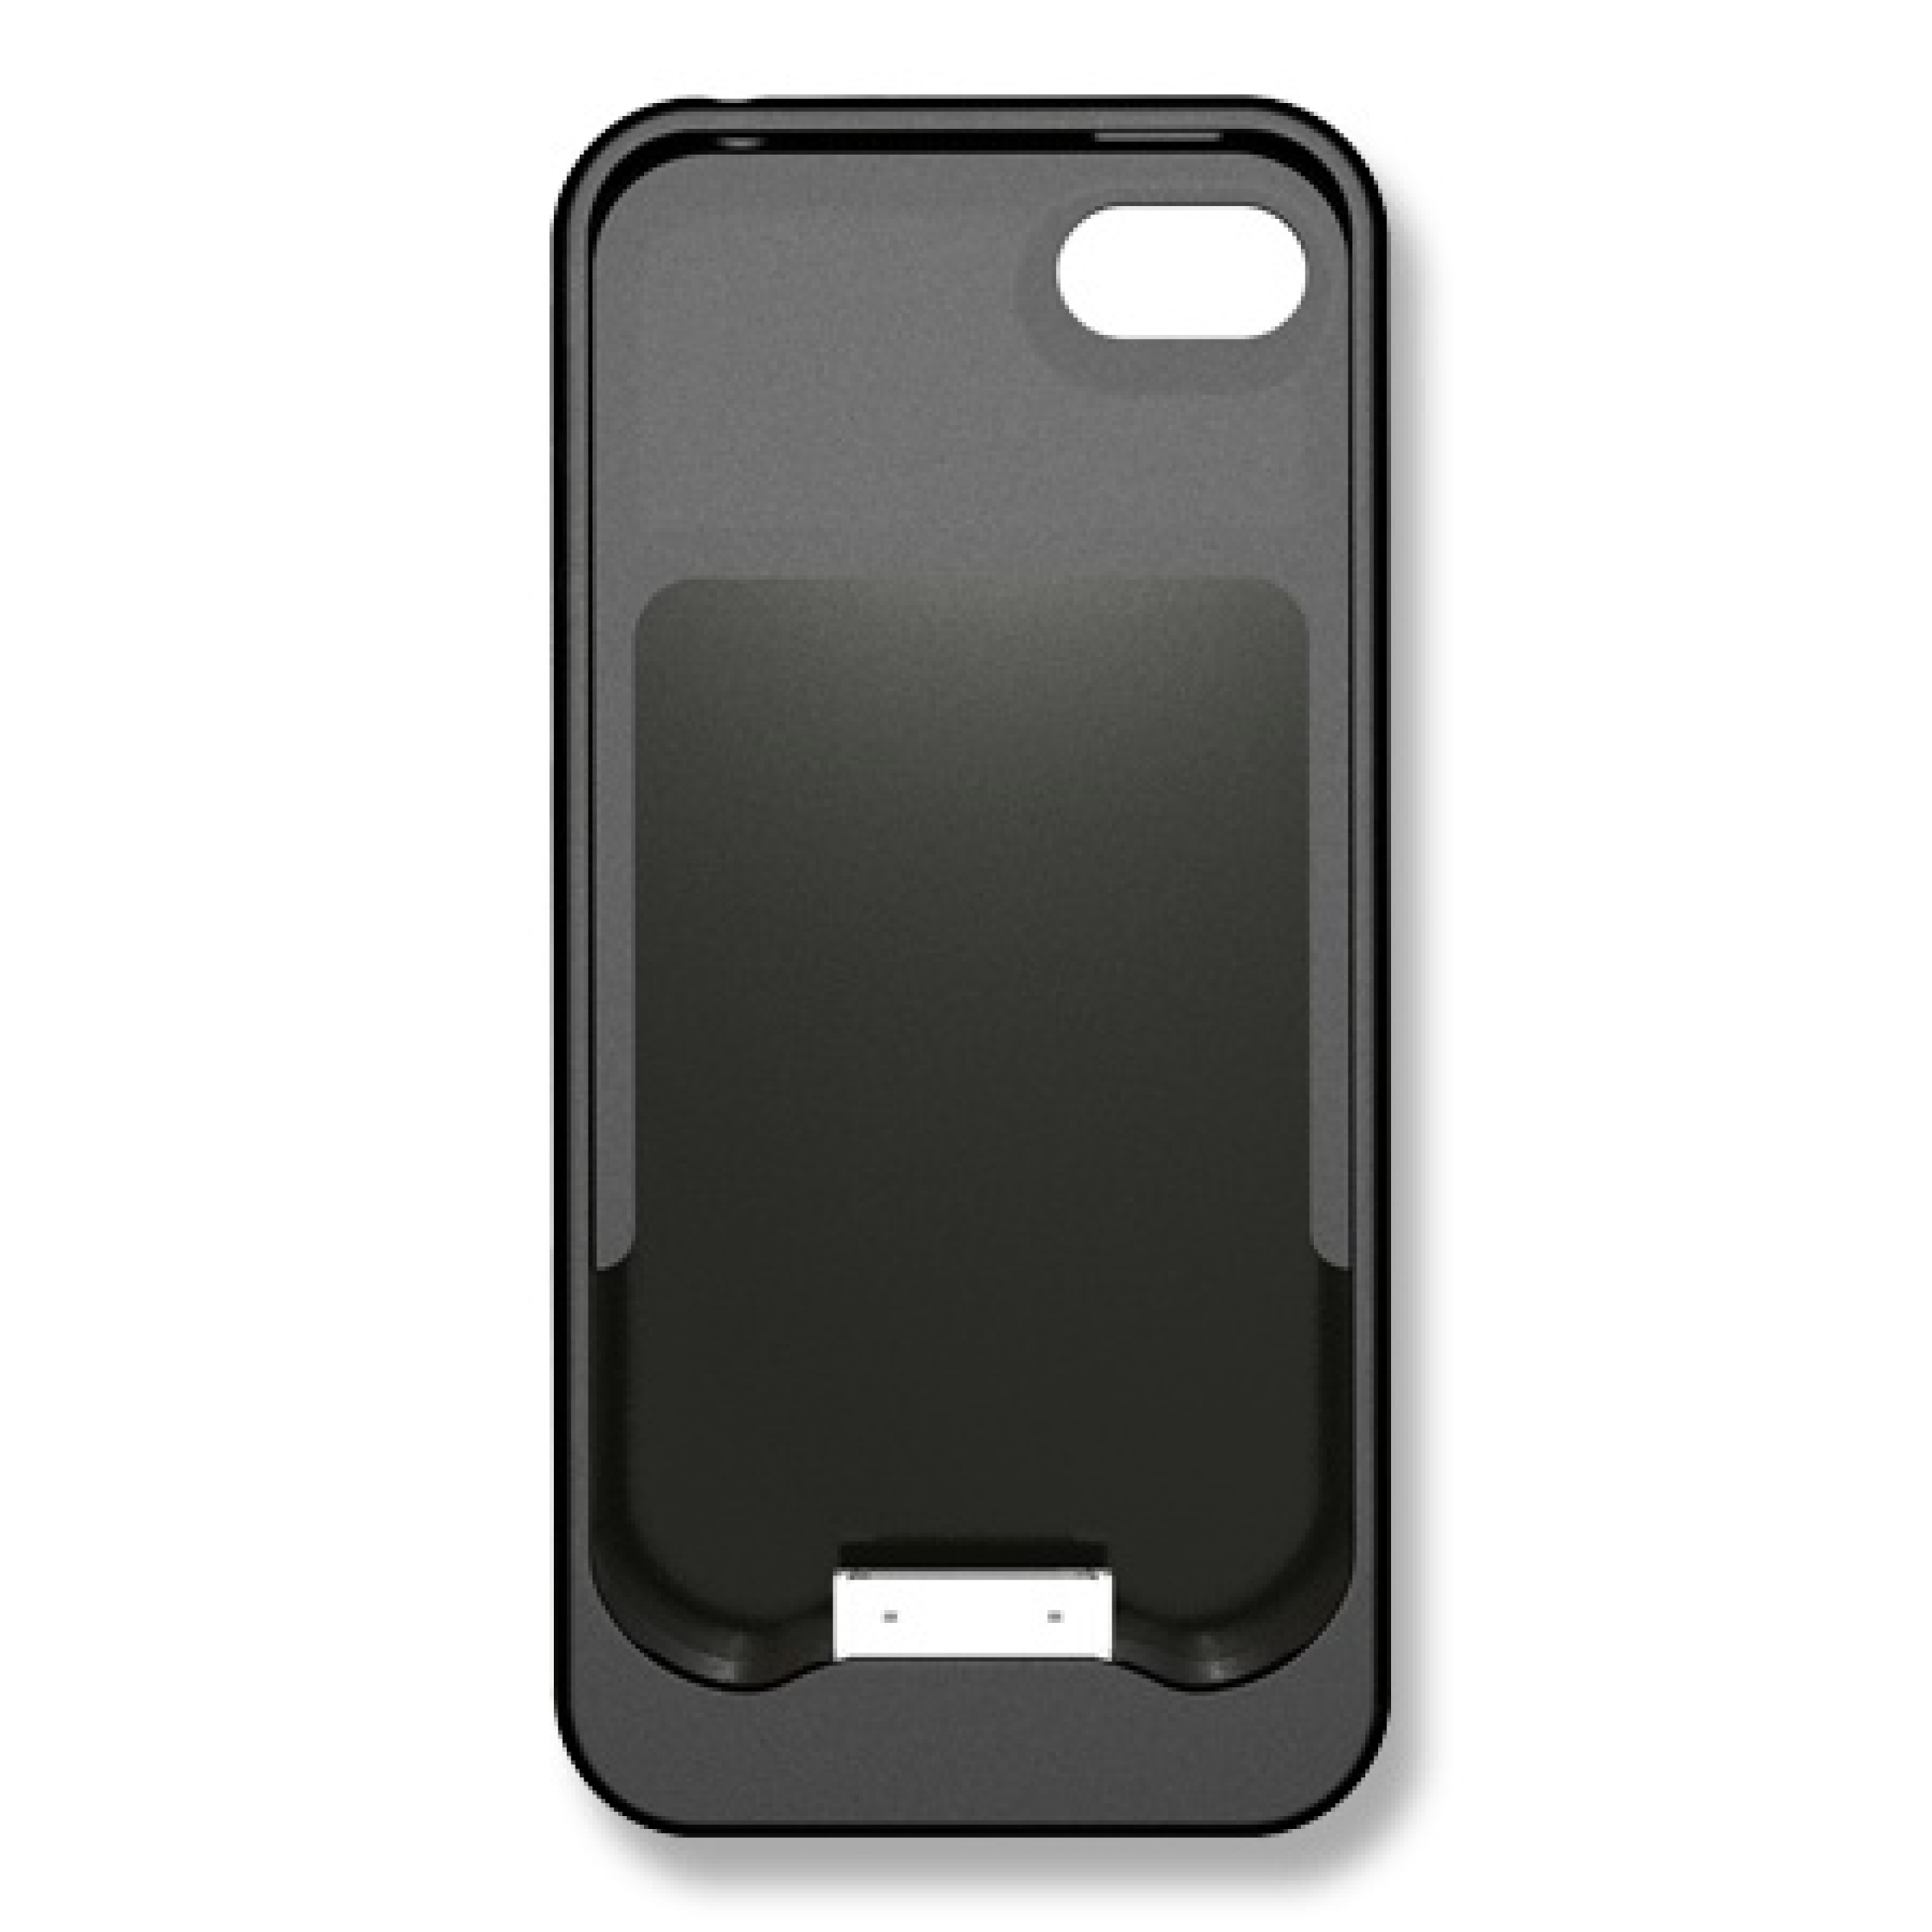 Energi To Go AP1201 iPhone Case + Built-in-Batteries